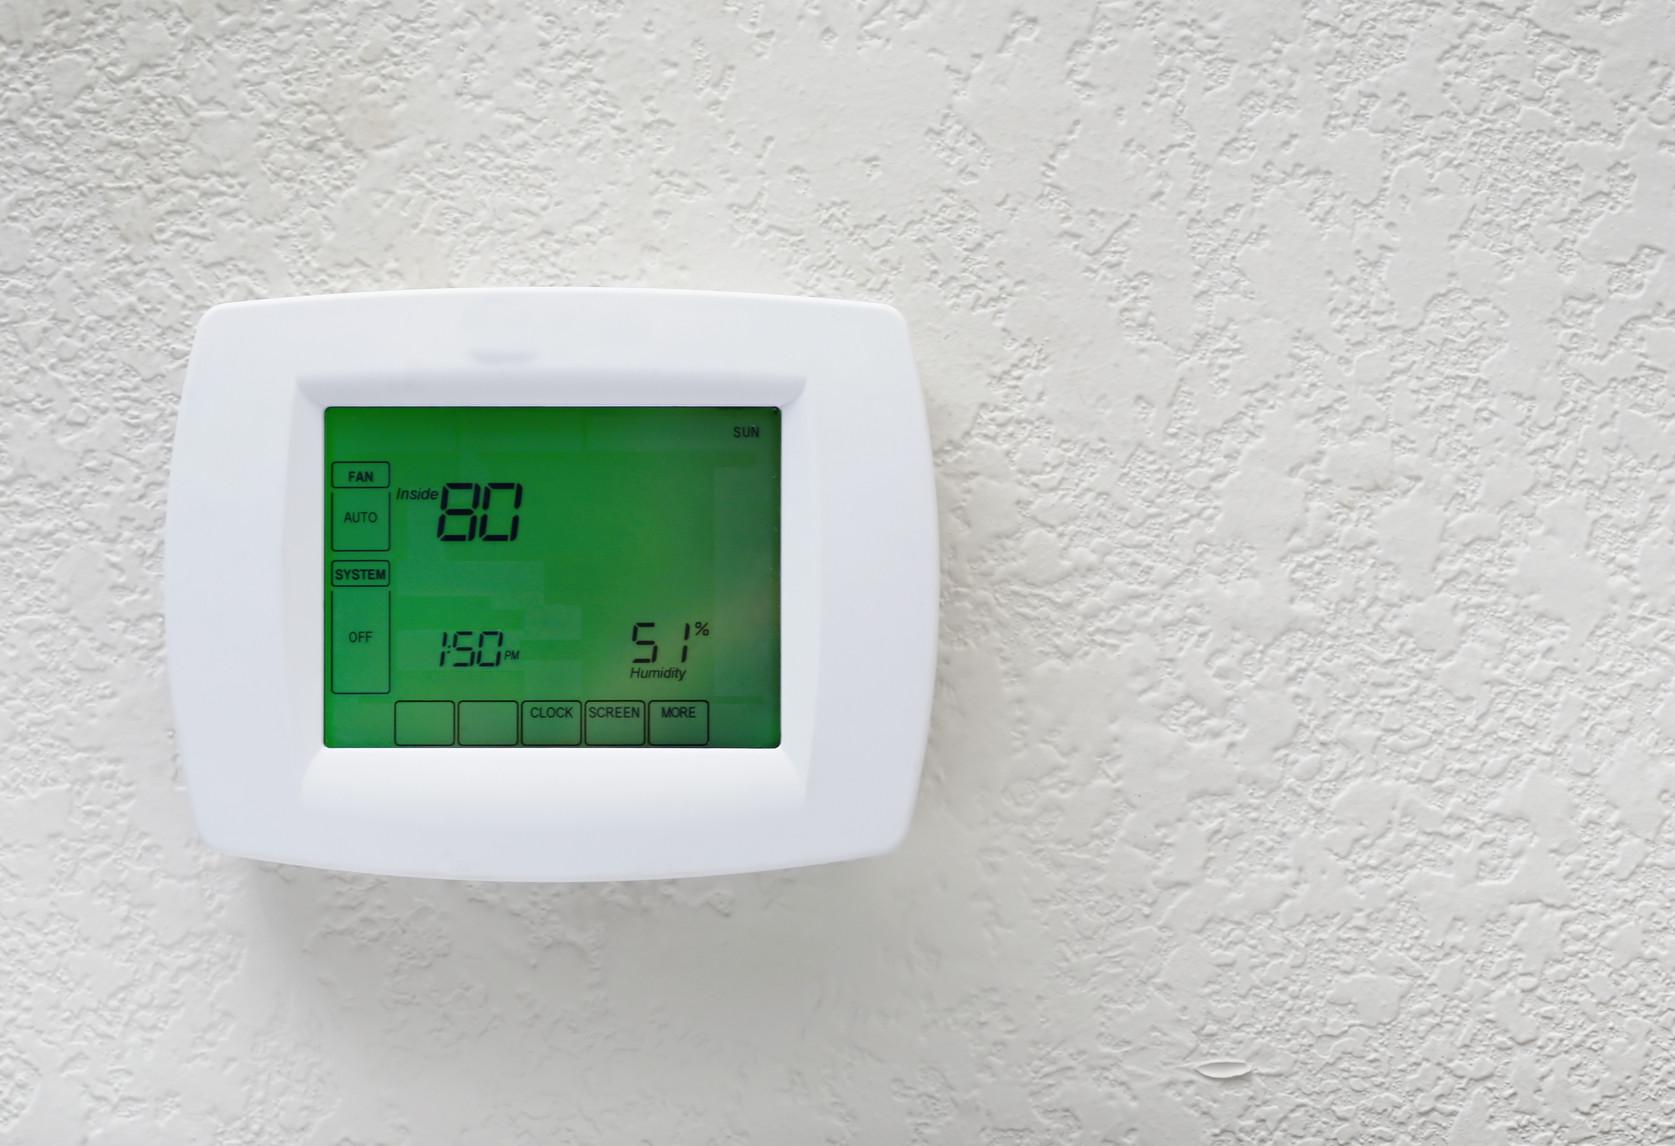 Modern programmable thermostat-energy saving unit